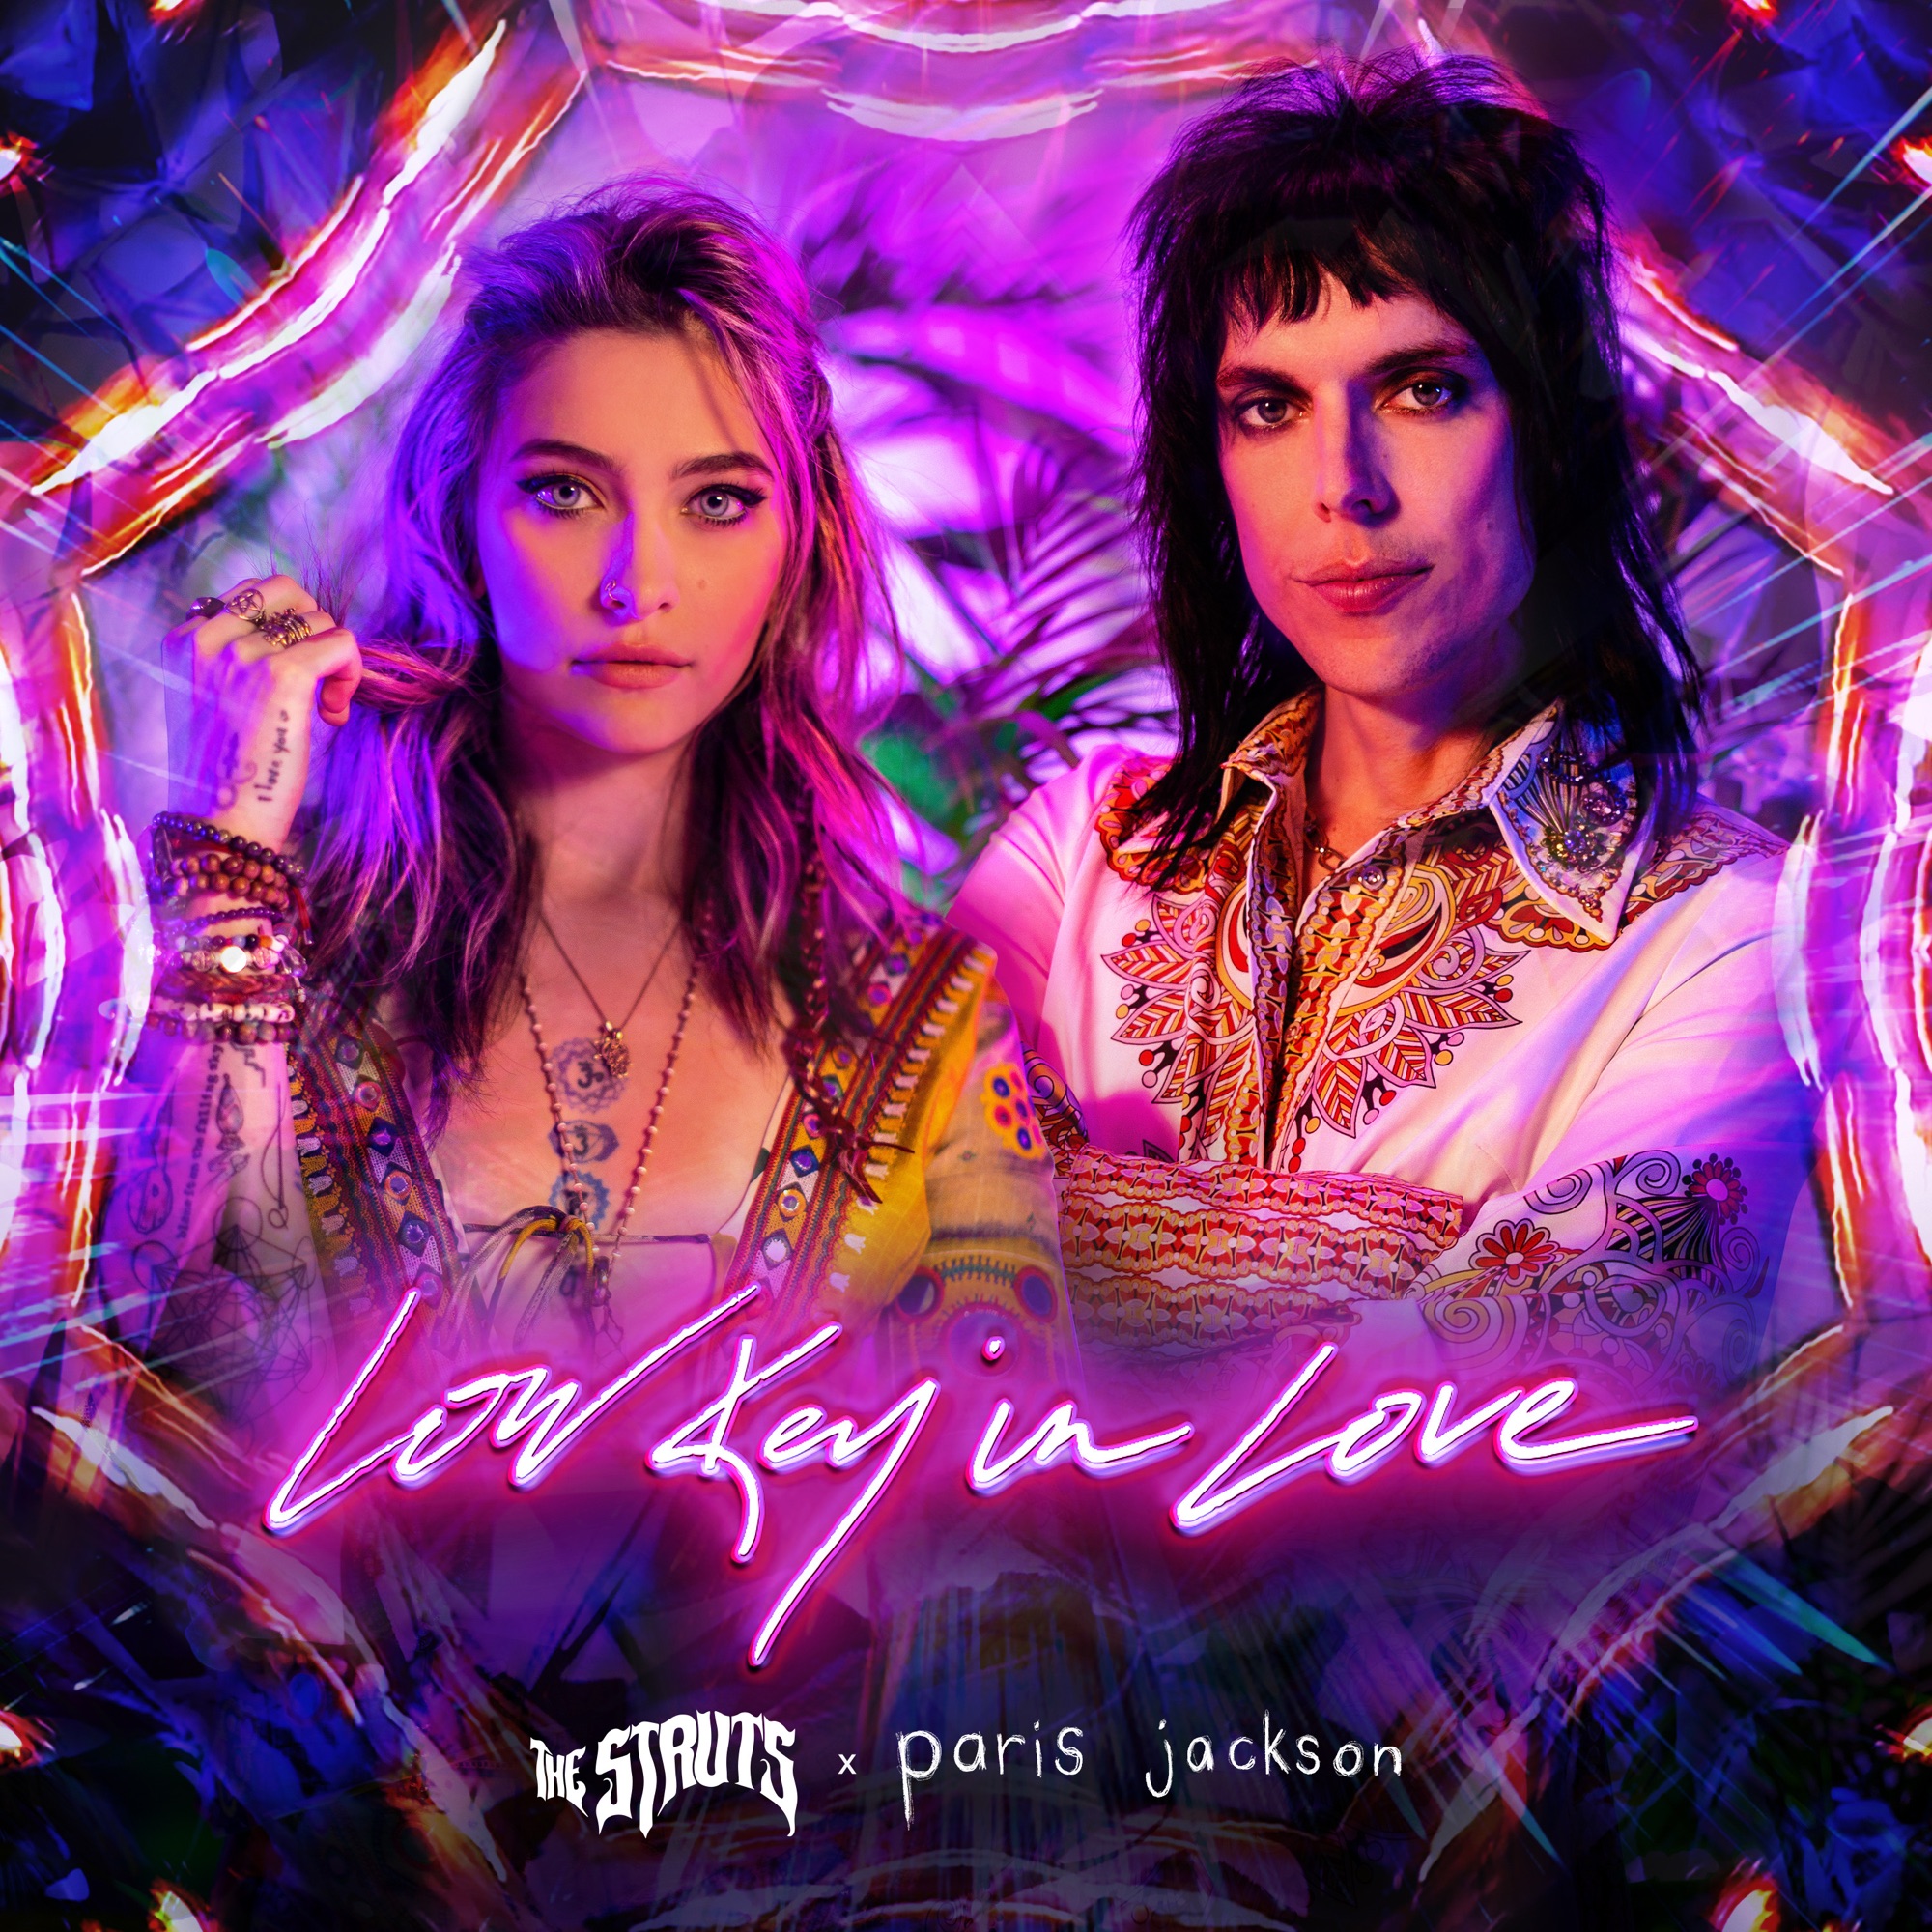 The Struts & paris jackson - Low Key In Love - Single